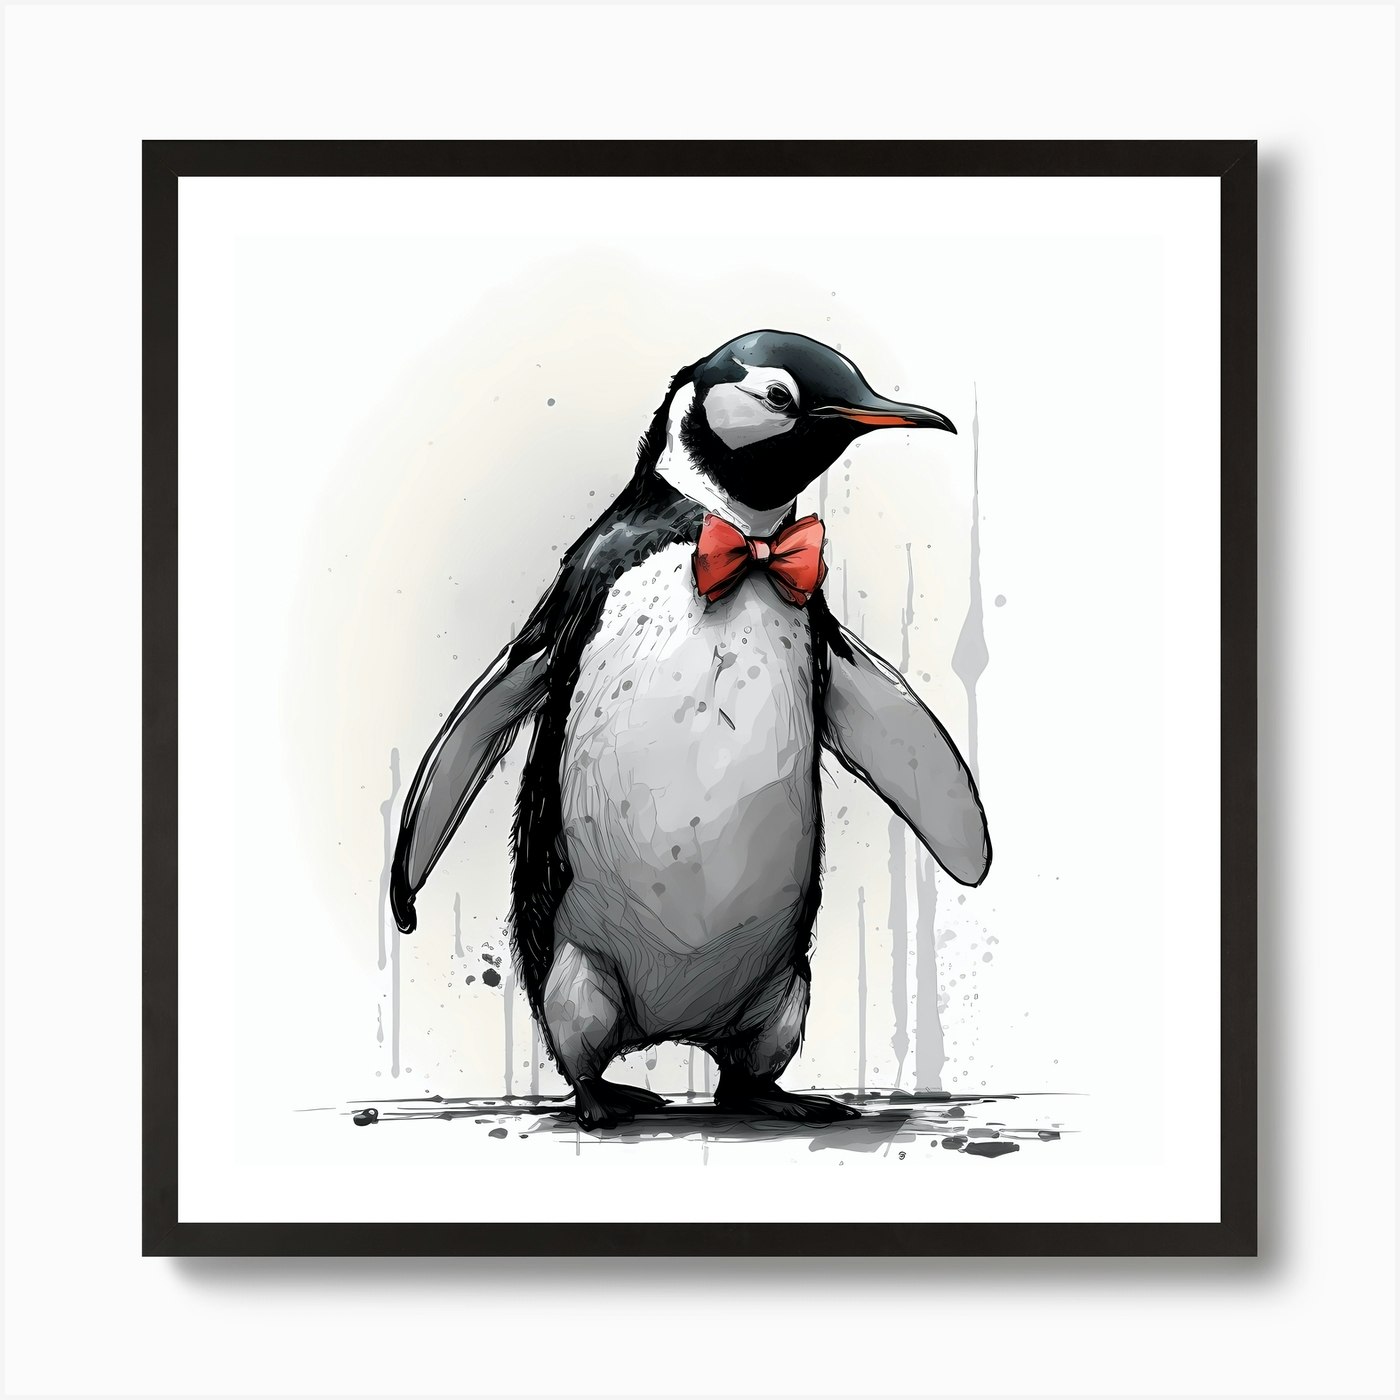 Designocracy 98741-12 Love You More Penguins Art on Board Wall